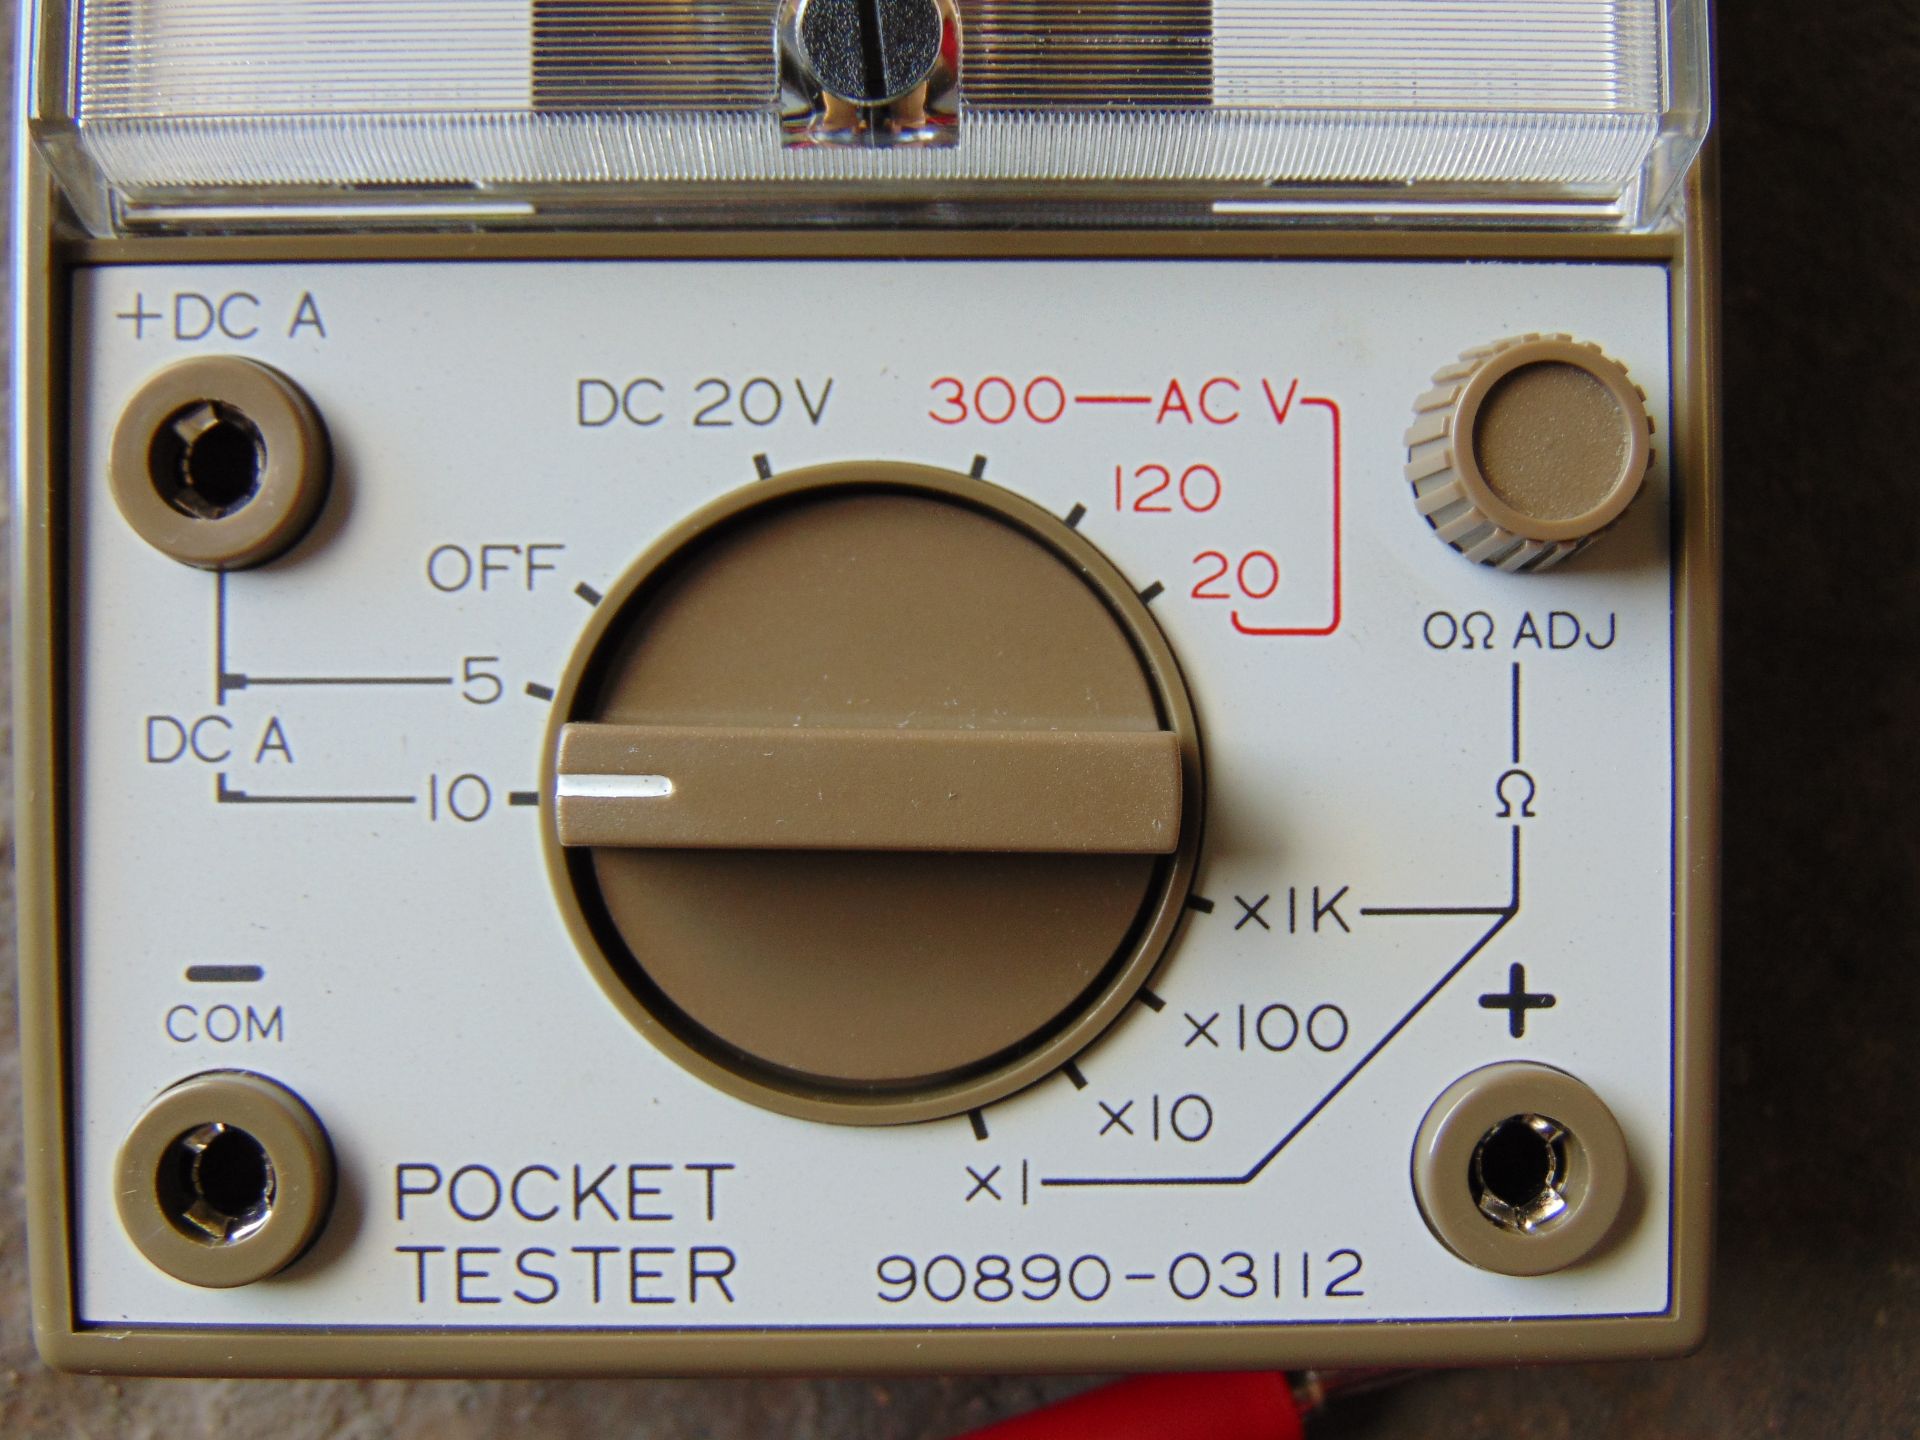 15 x Yamaha Pocket Testers/Mulitimeters P/no 90890-03112 - Image 5 of 6